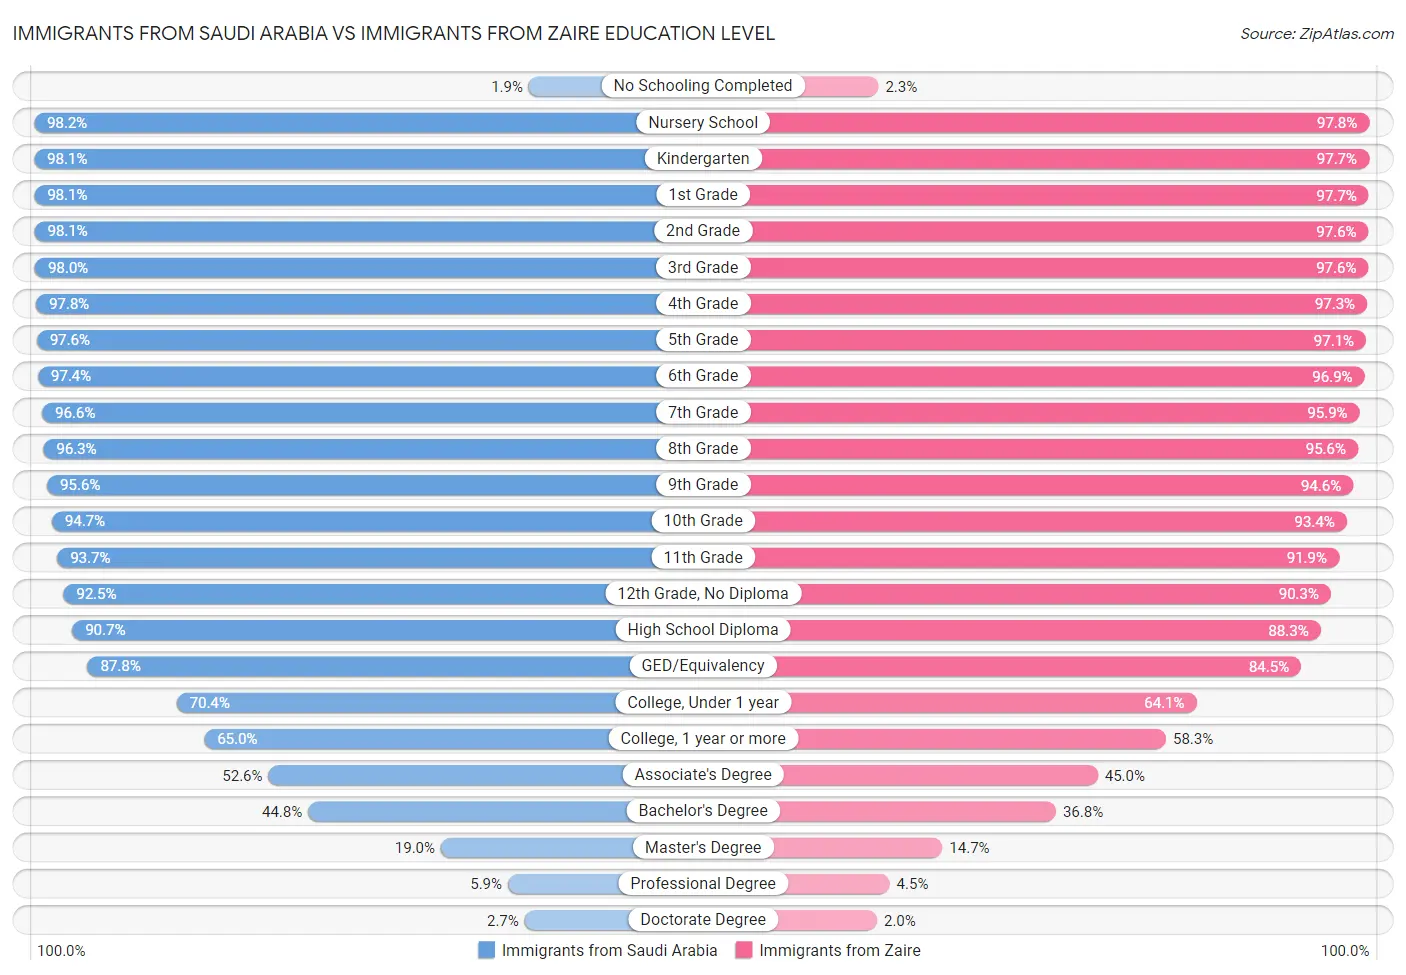 Immigrants from Saudi Arabia vs Immigrants from Zaire Education Level